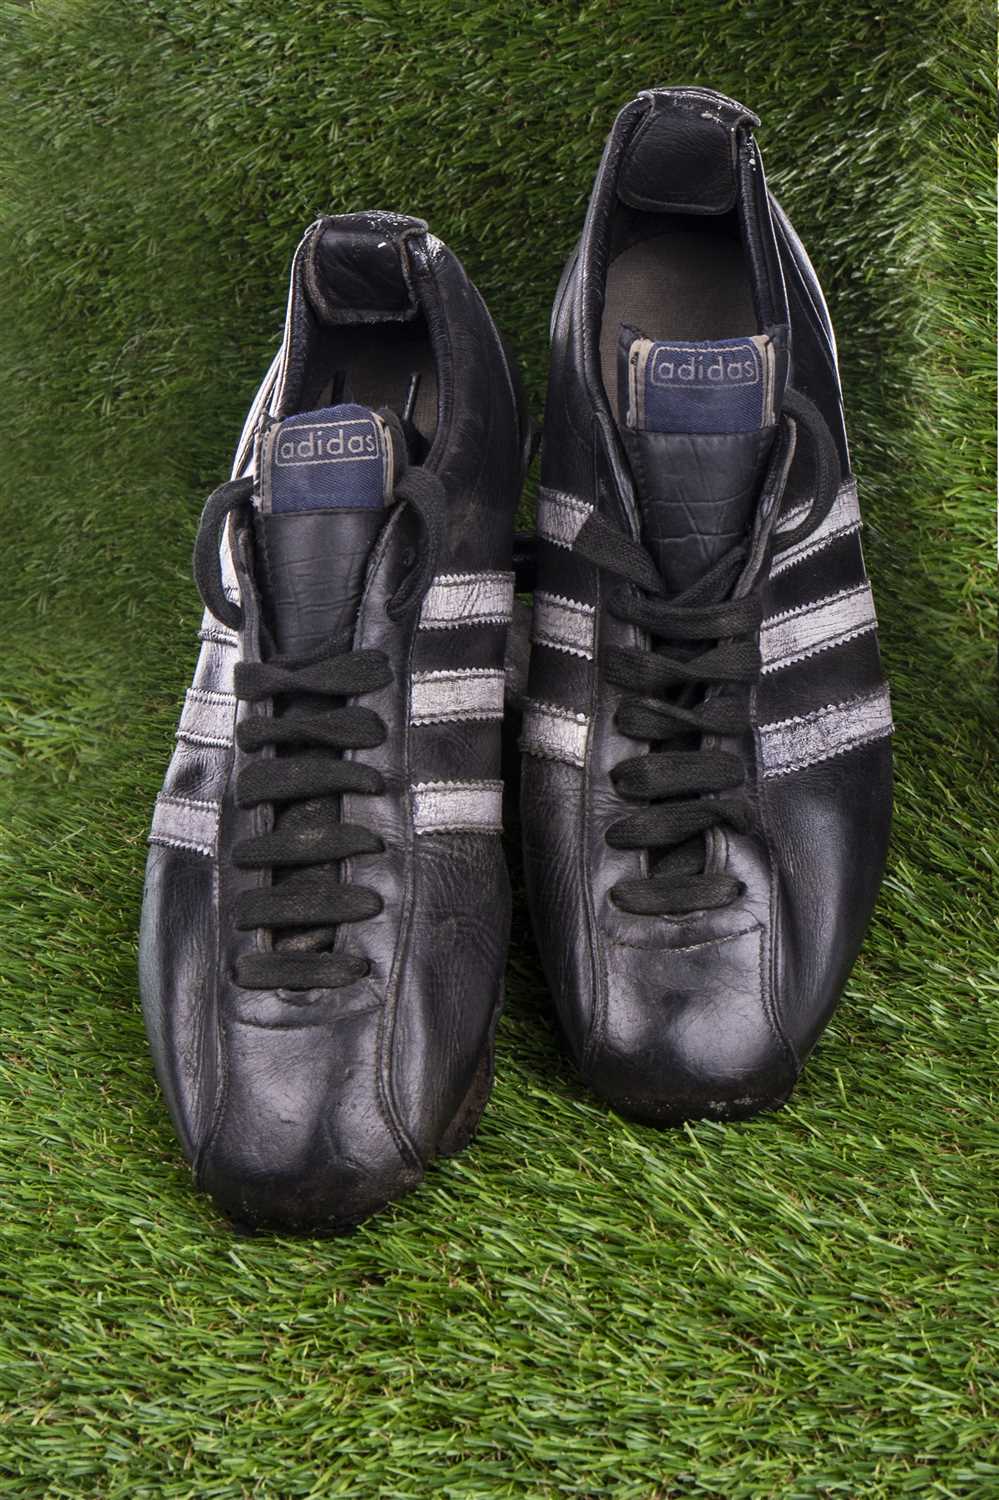 celtic football boots